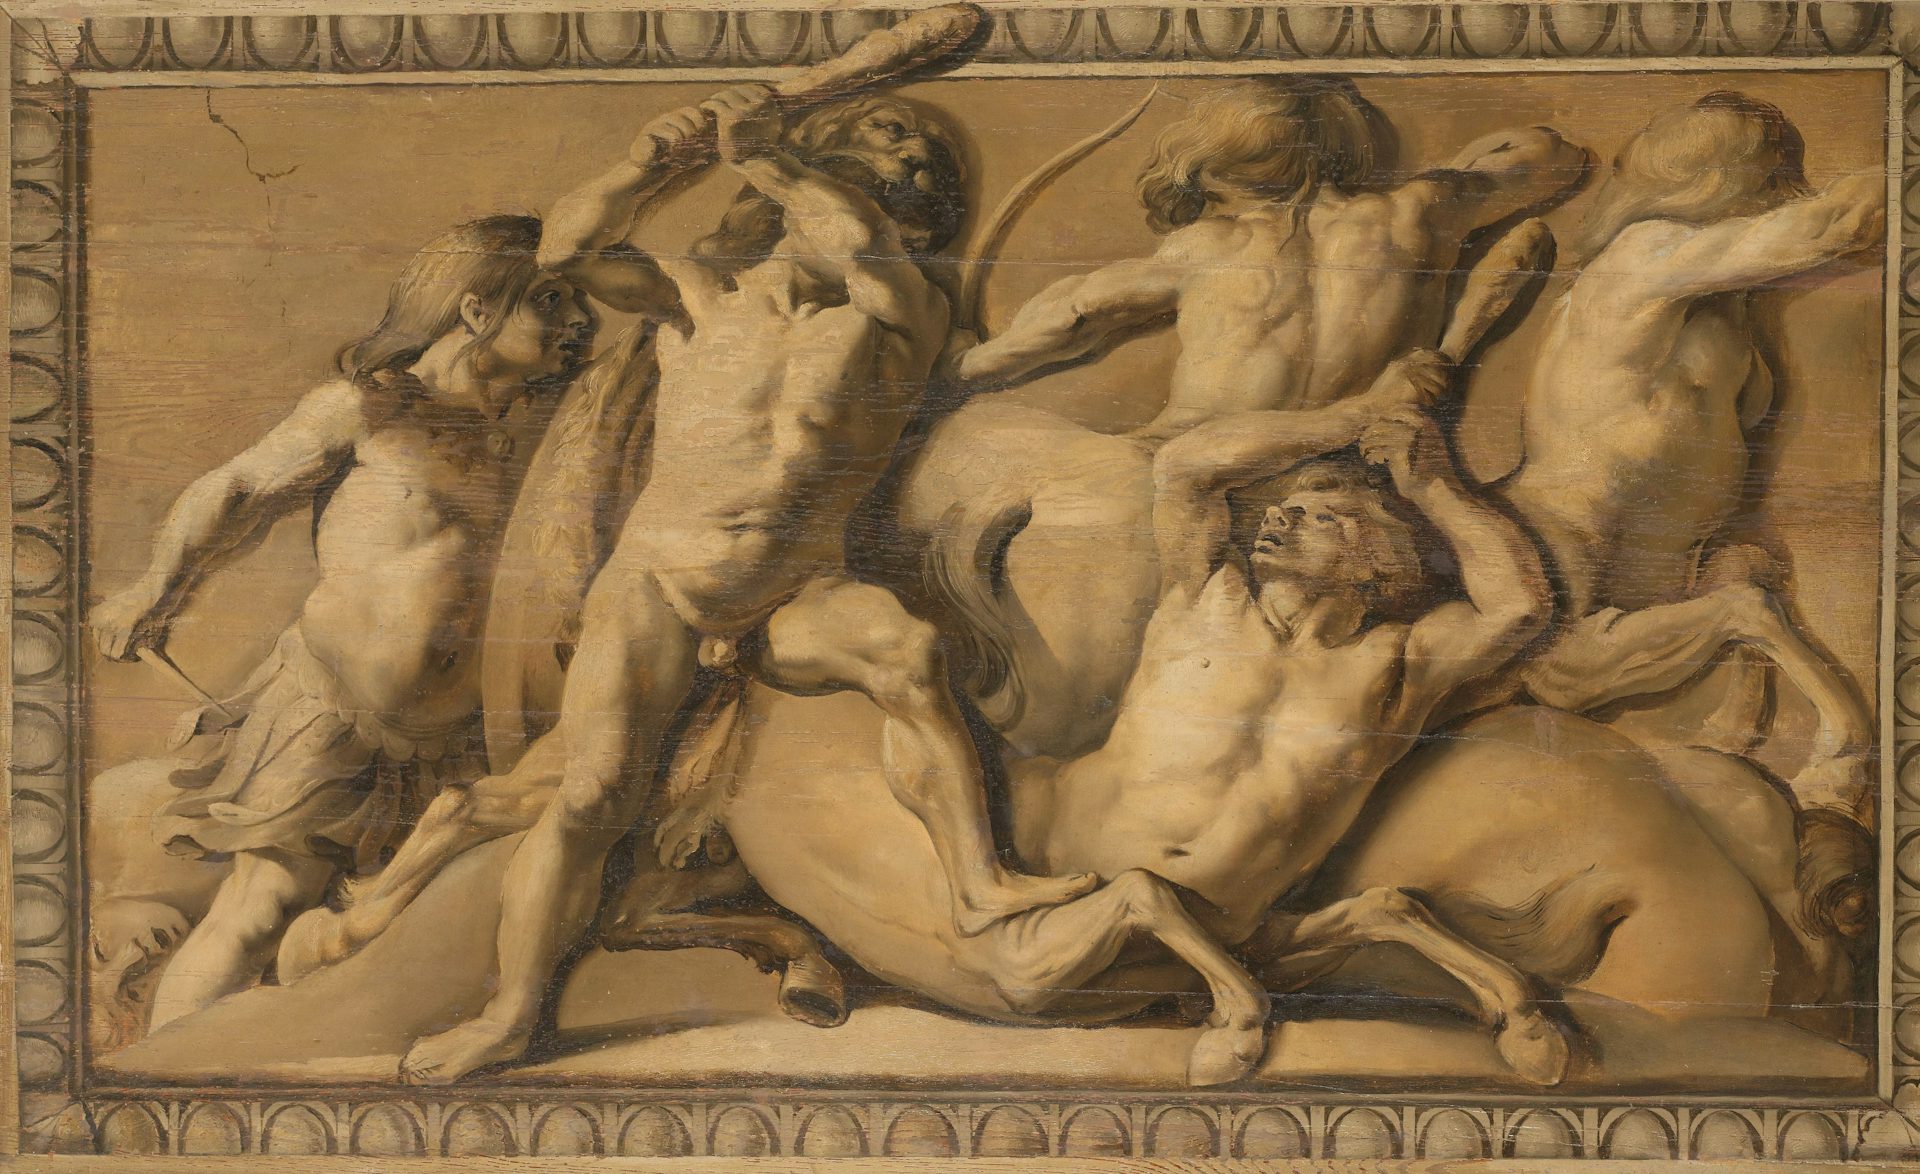 Hercules defeating the Centaurs by Jacob van Campen, circa 1645-1650